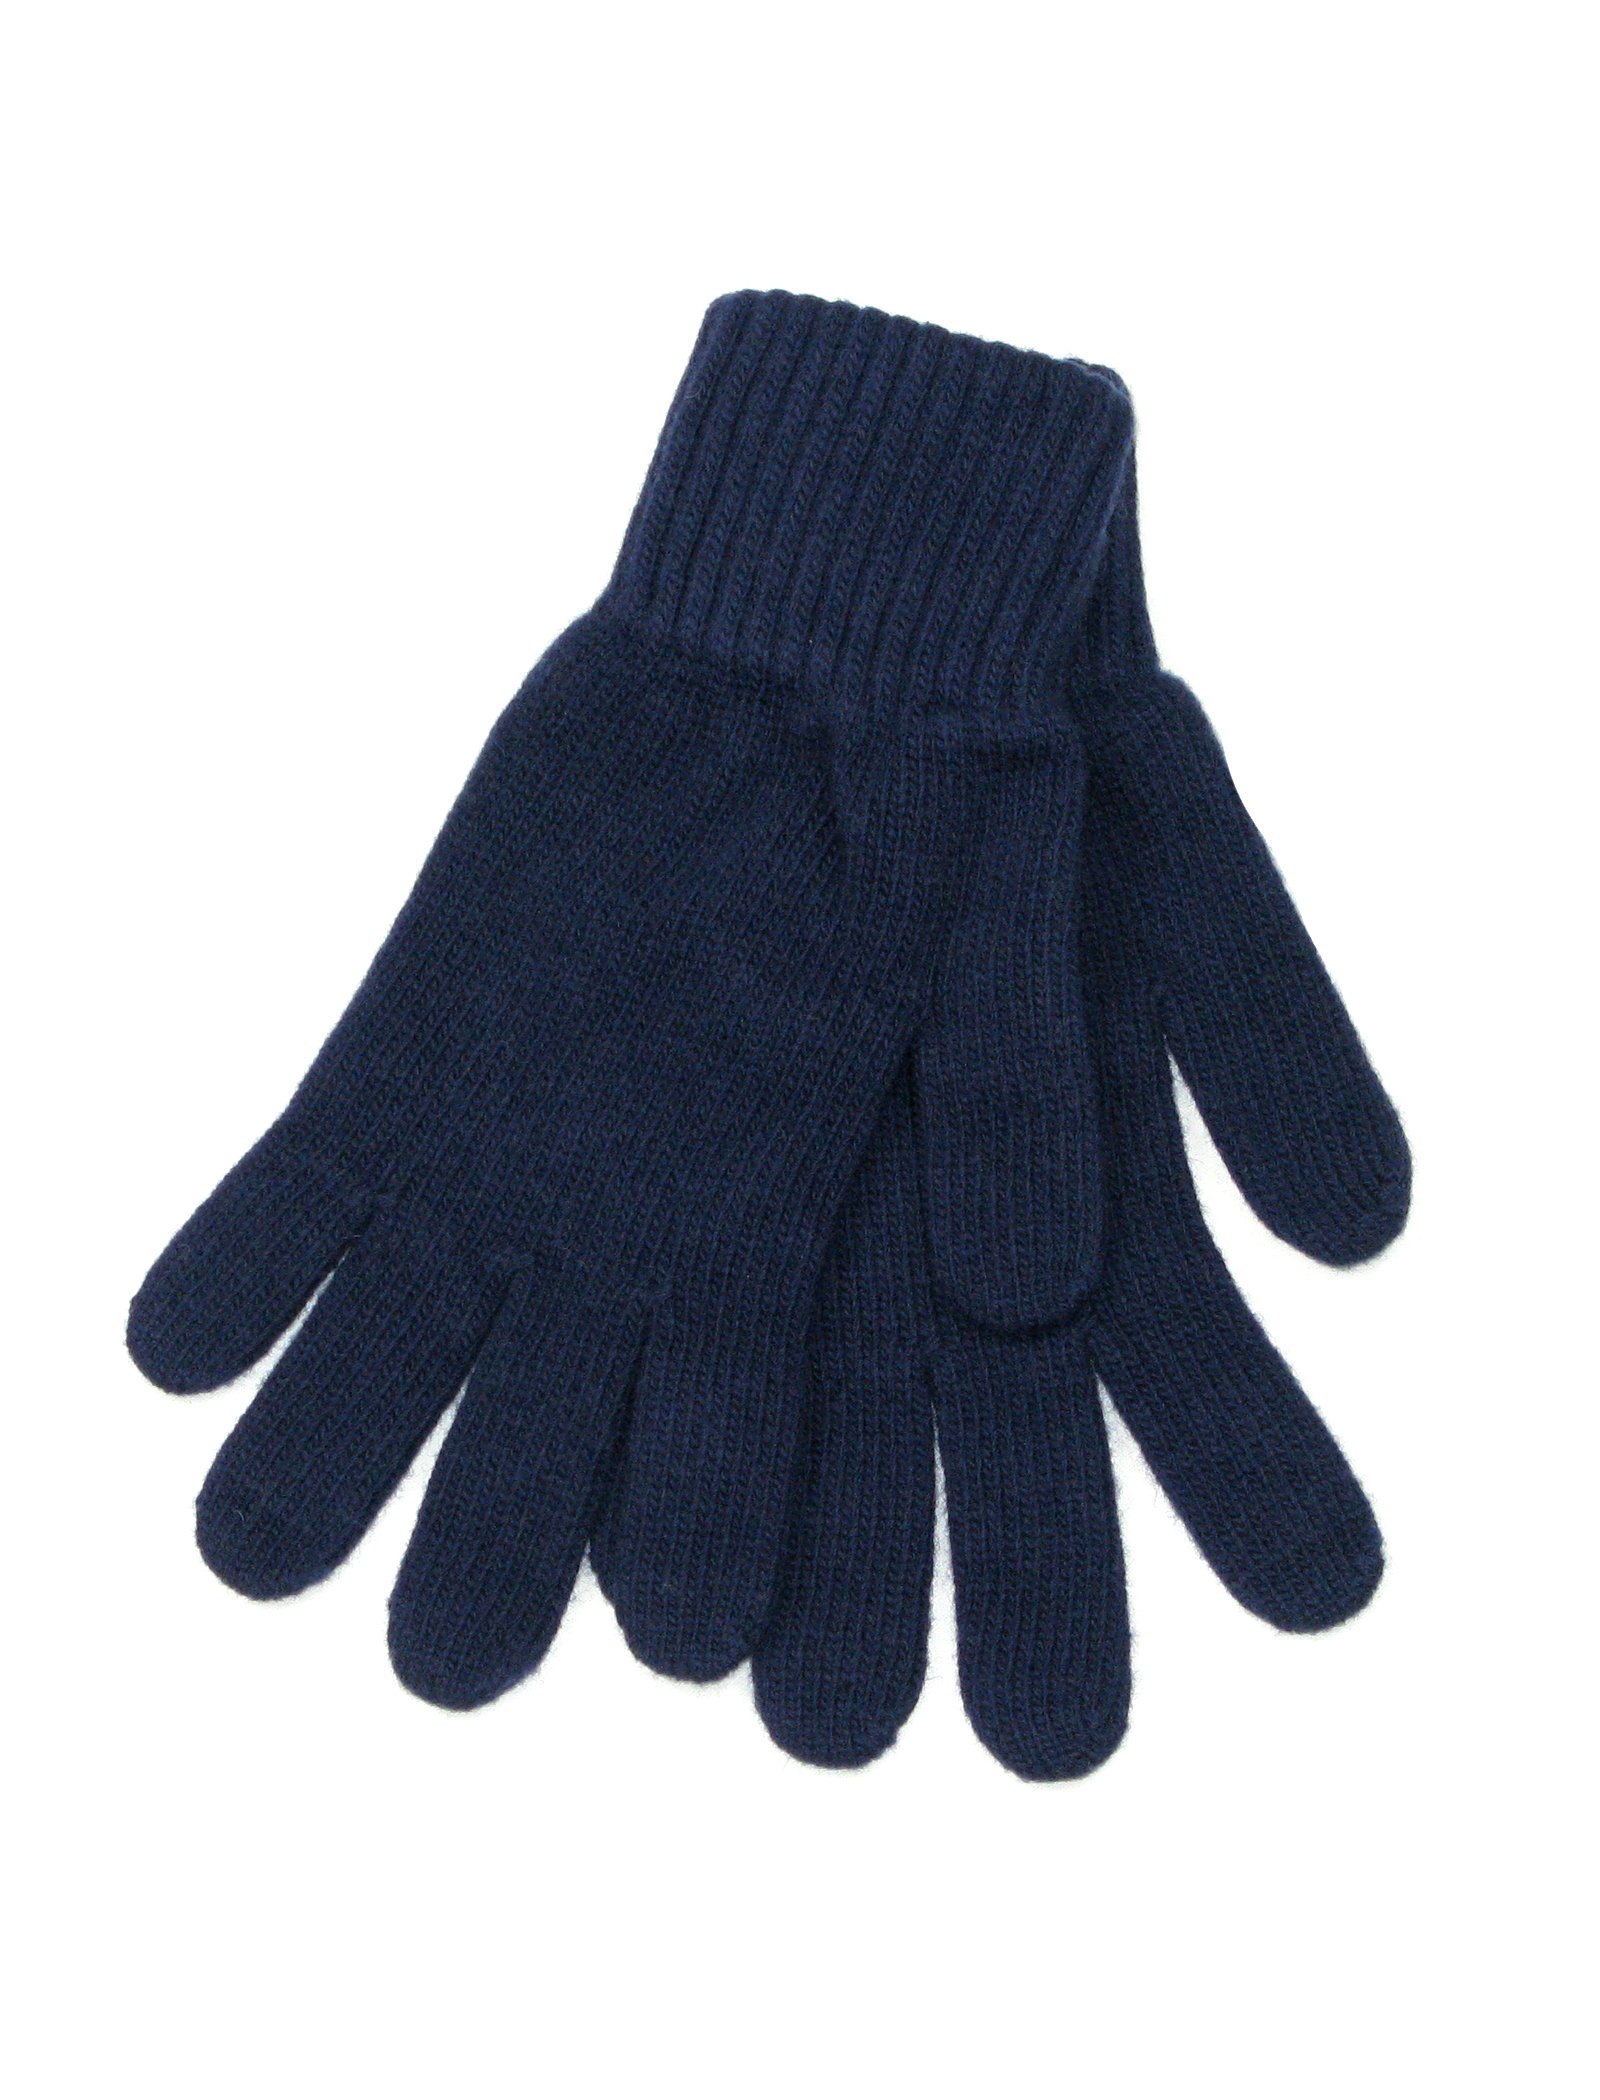 LOVARZI Handschuhe Wolle Herren Winter- Männerhandschuhe aus Wolle Blau - Winterhandschuhe für Herren - strickhandschuhe herren